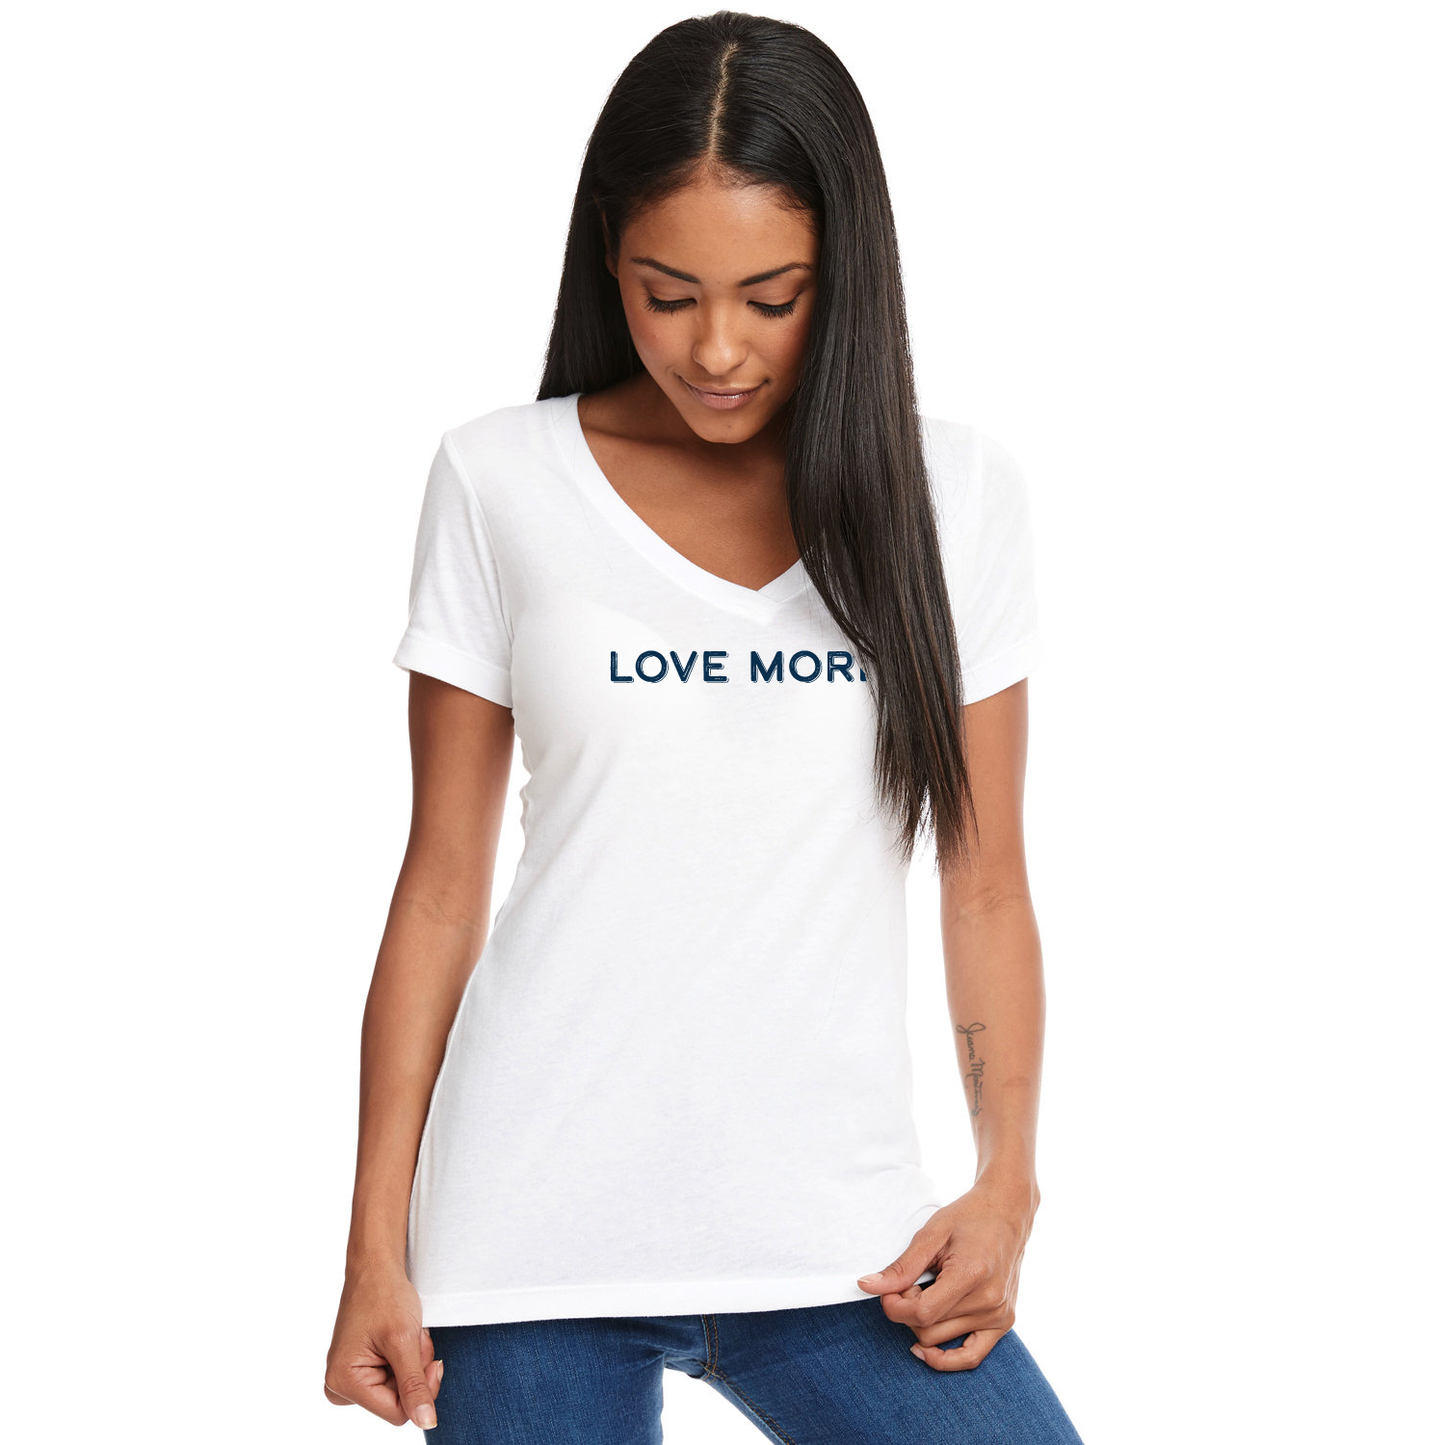 Love More White T-Shirt - 050